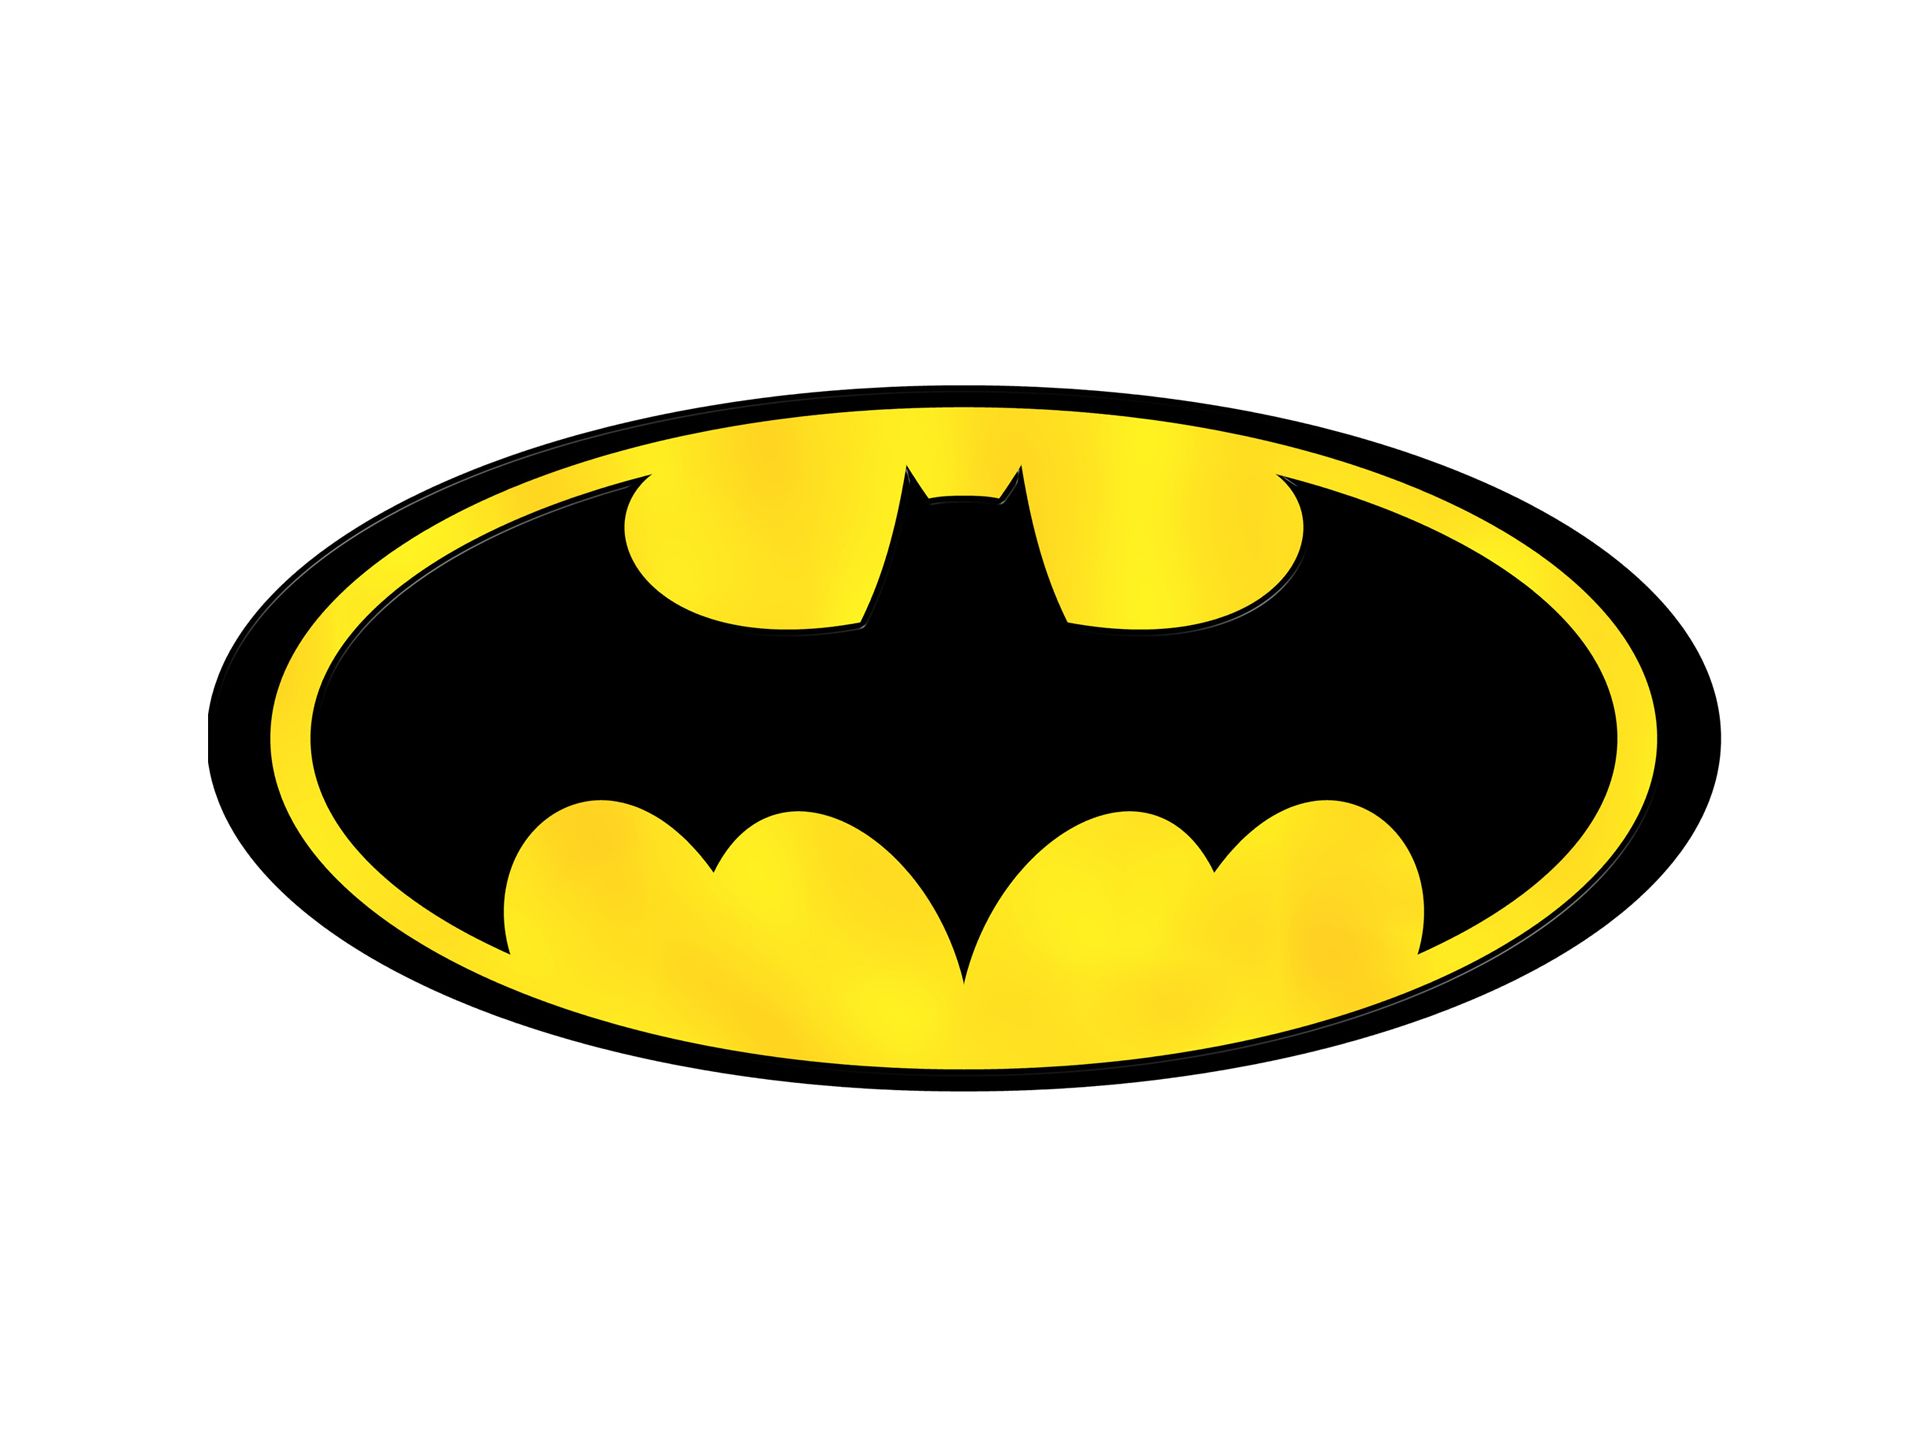 Batman Logo Drawing by DJSpaztik - DragoArt